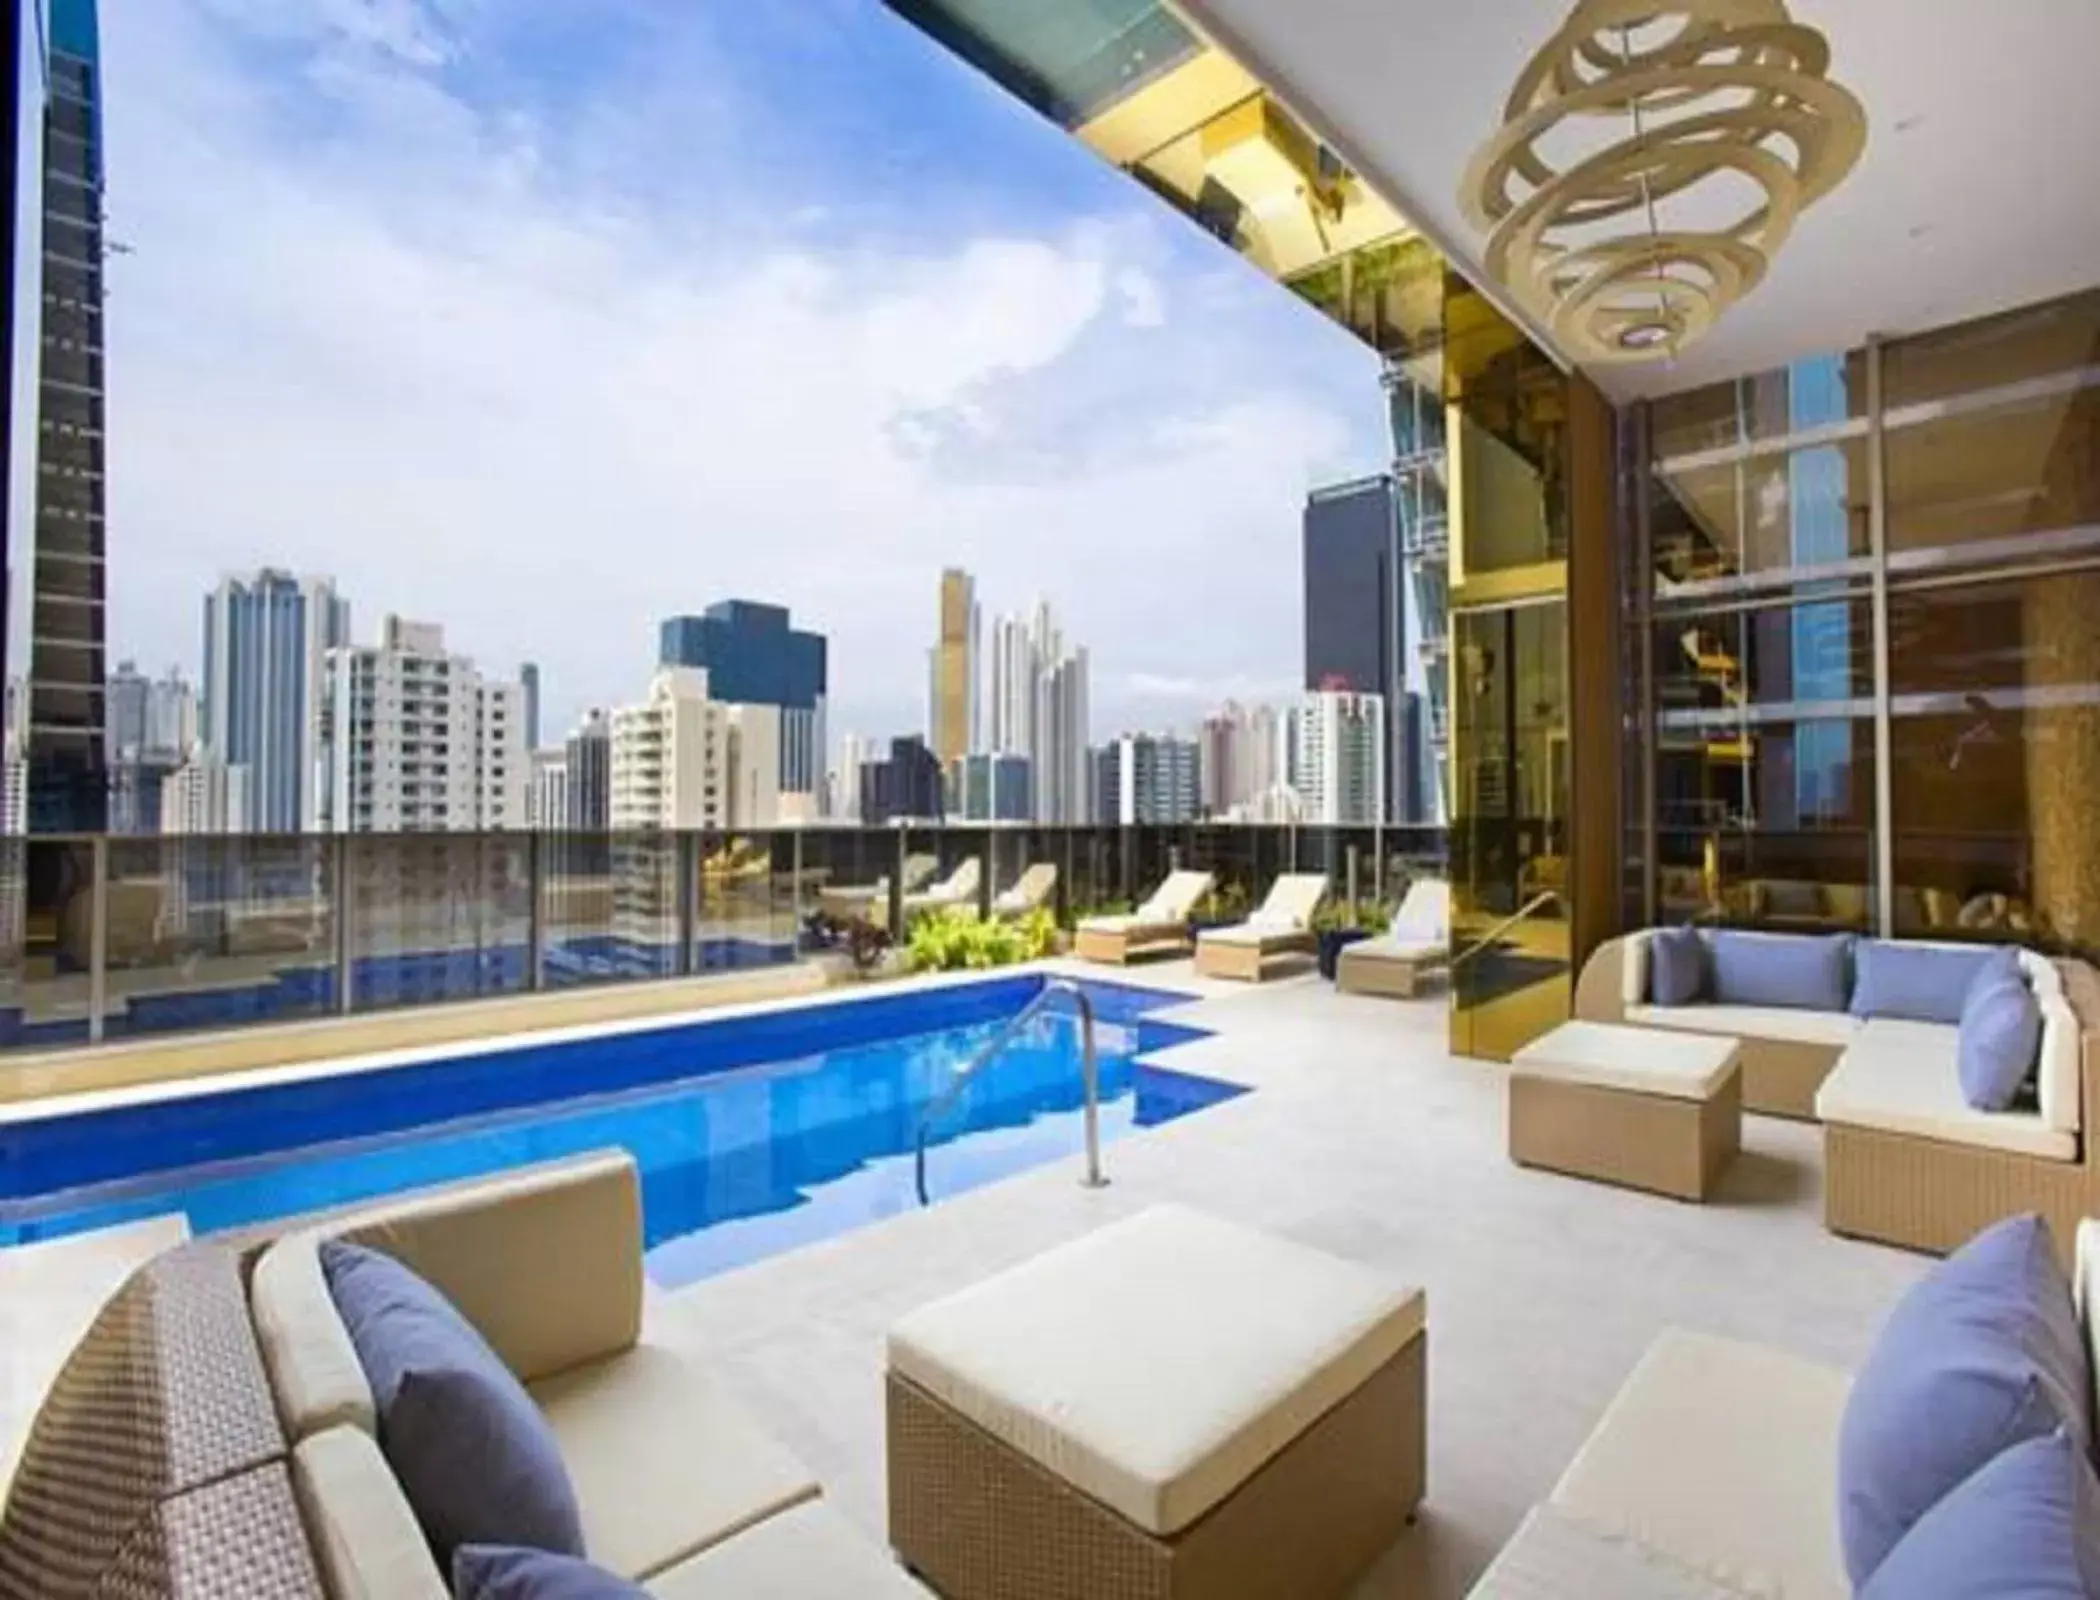 Swimming Pool in Global Hotel Panama